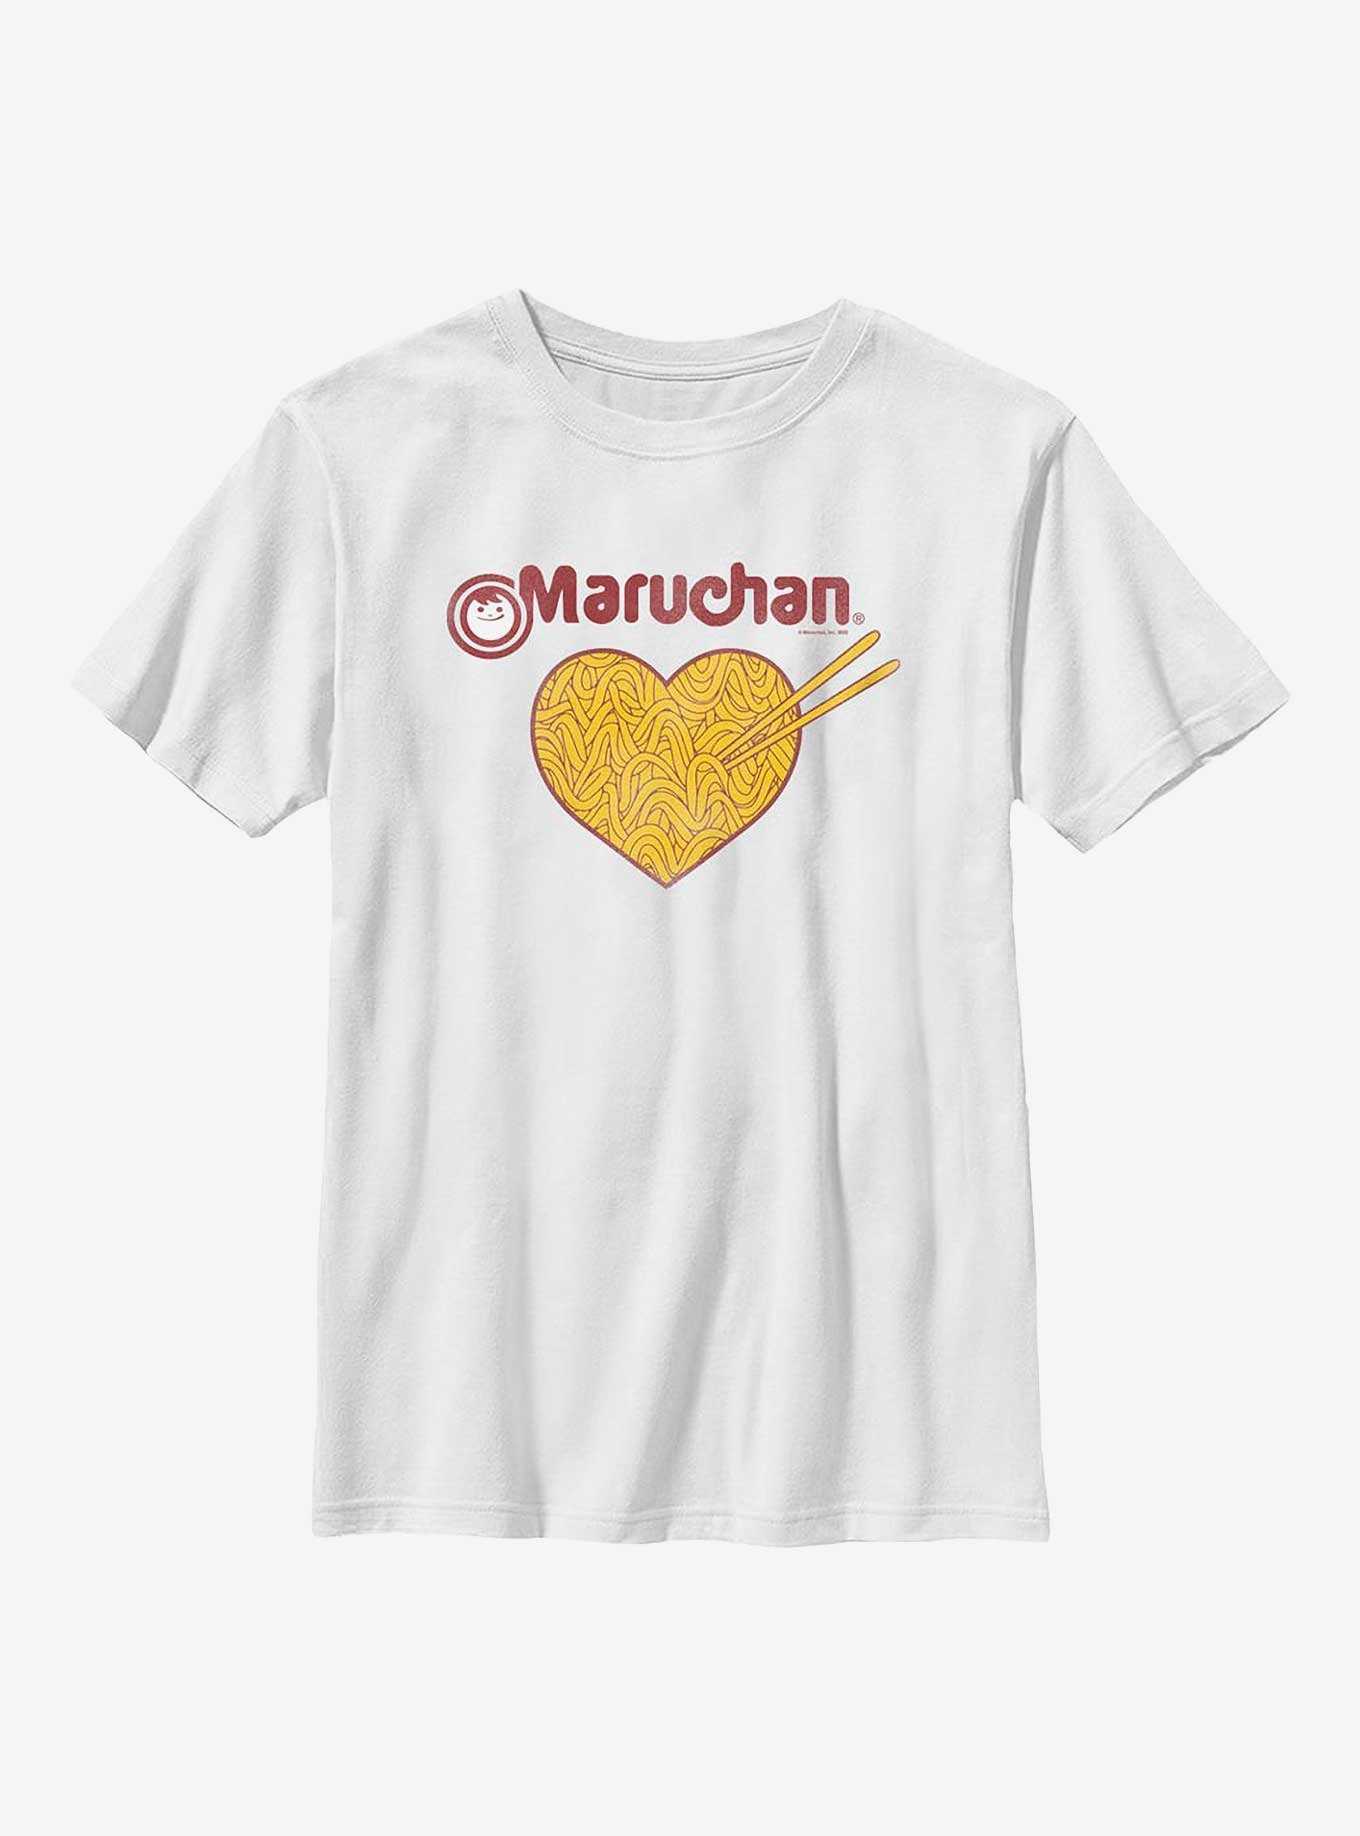 Maruchan Noodles Heart Youth T-Shirt, , hi-res